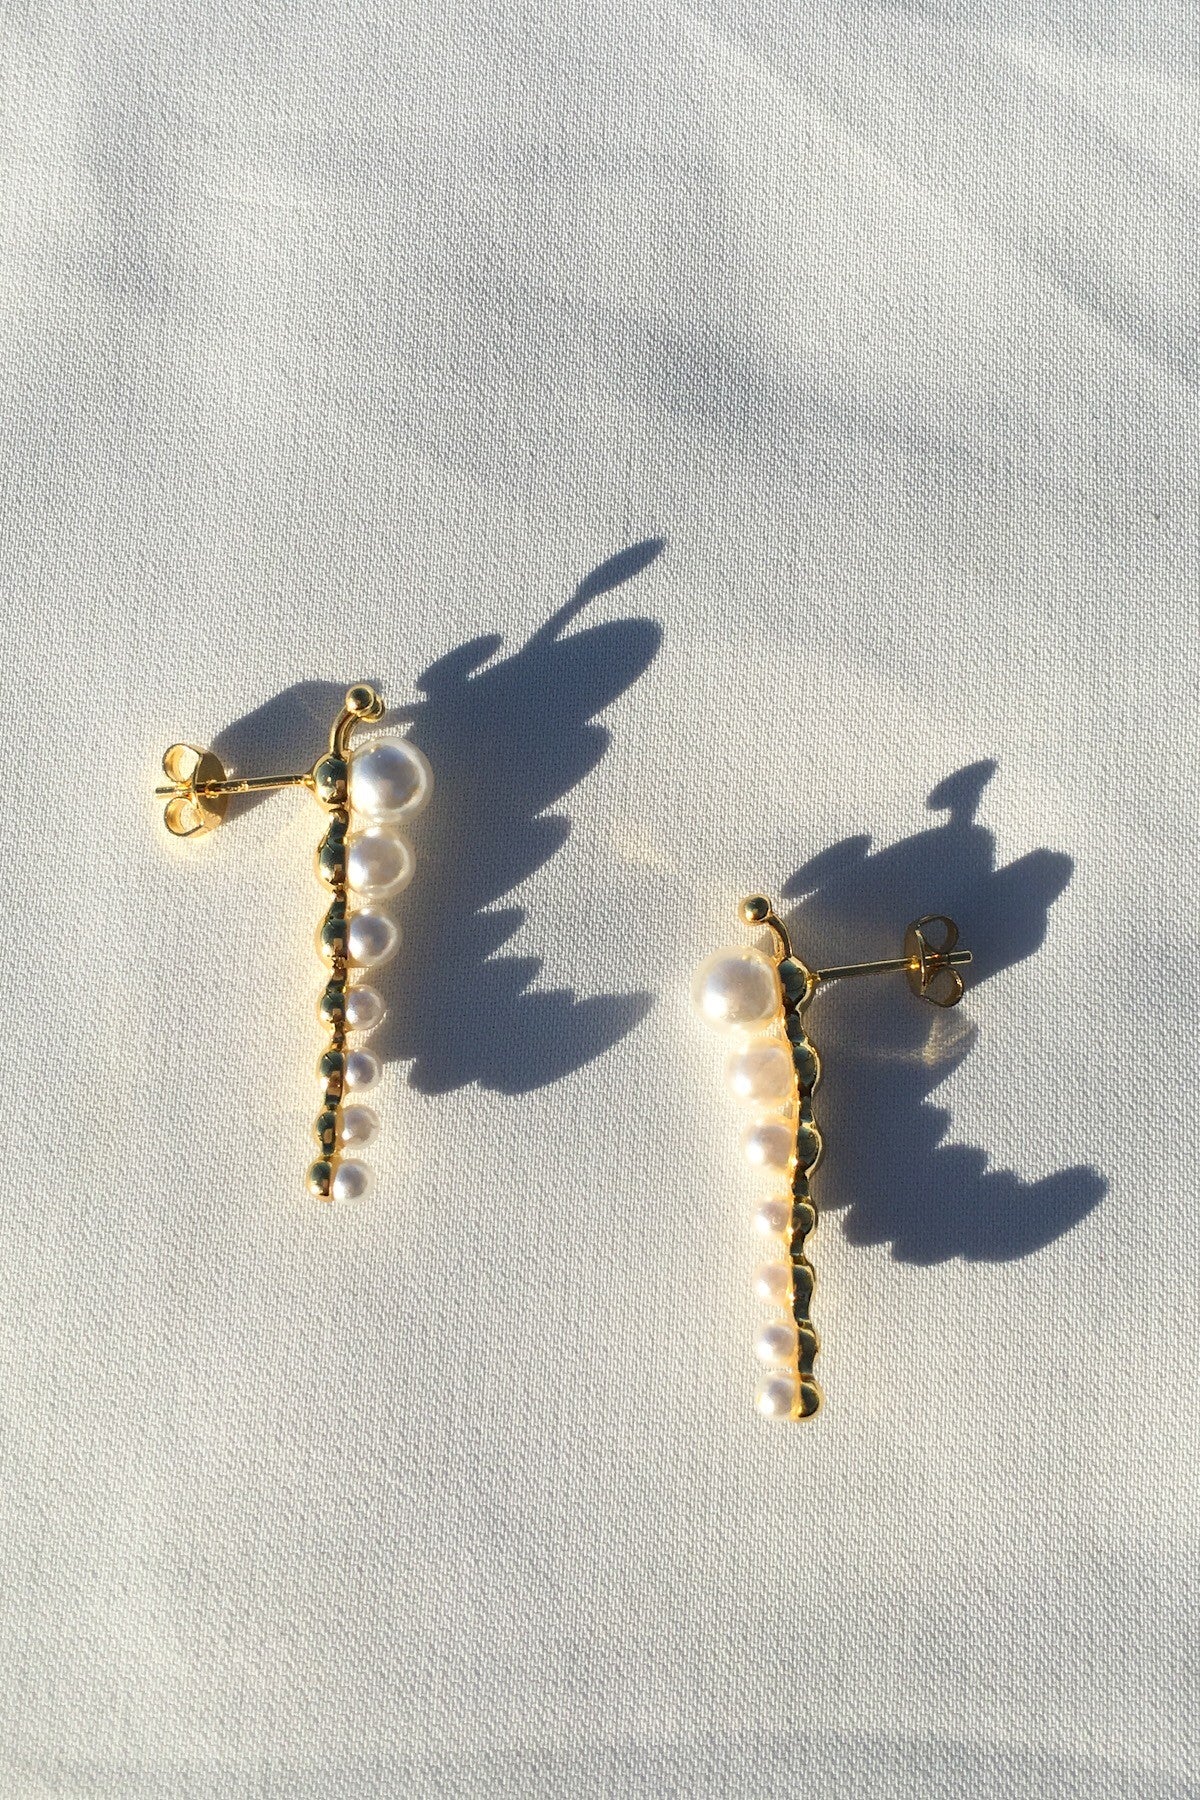 SKYE San Francisco SF ethical sustainable modern minimalist women fashion accessories Zelia 18K Gold Pearl Caterpillar Earrings 5